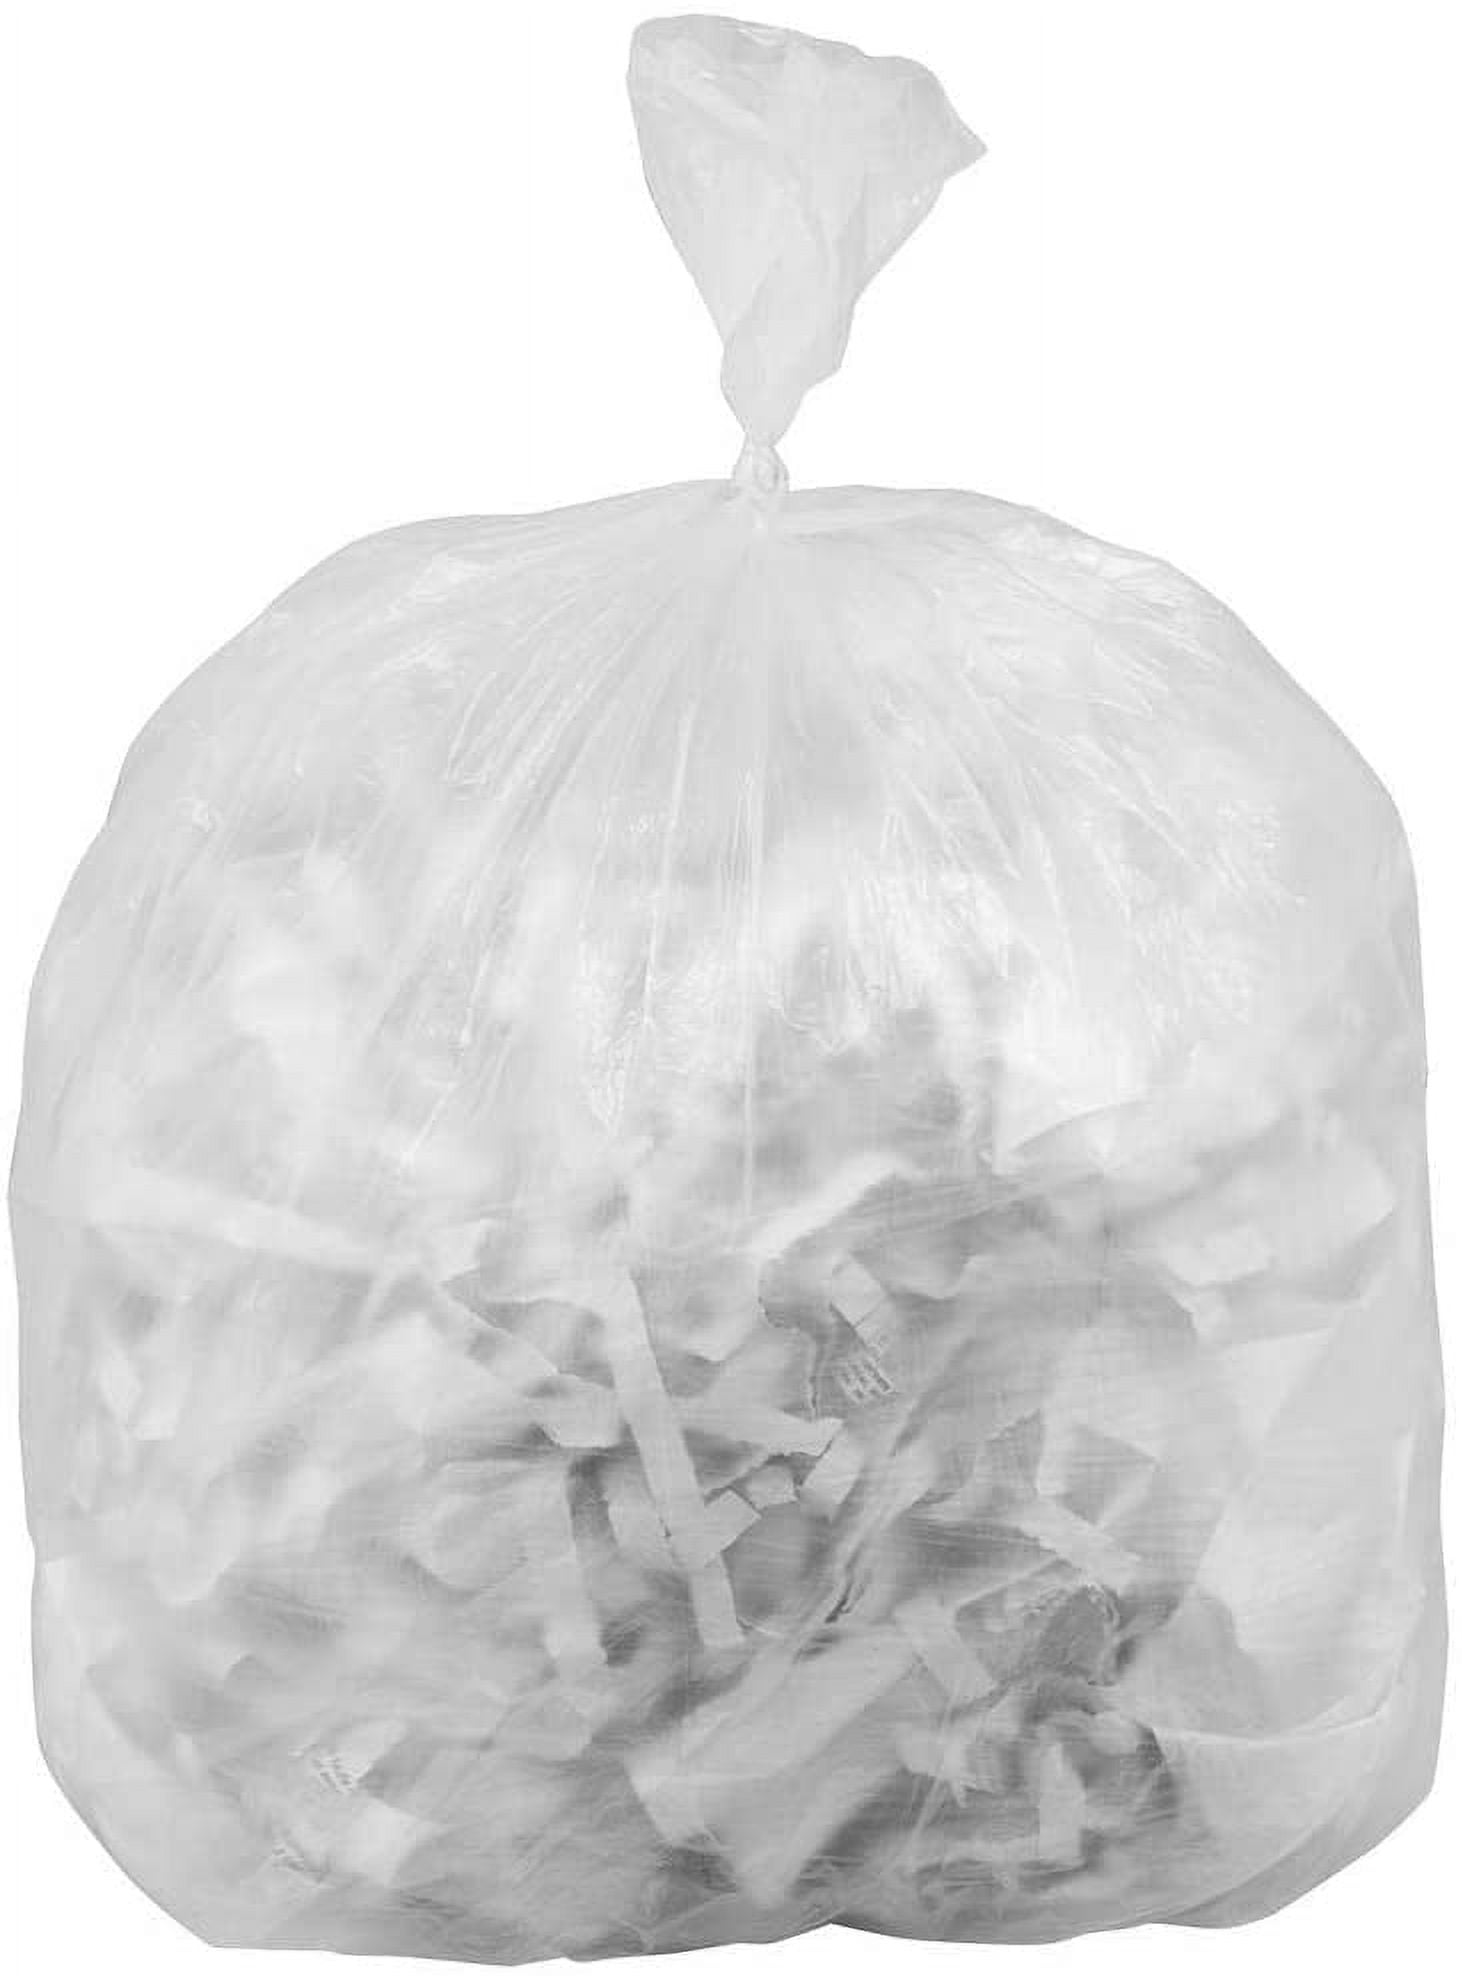 7-10 Gallon Black Trash Bags 24x24 8 Micron 1000 Bags-2223